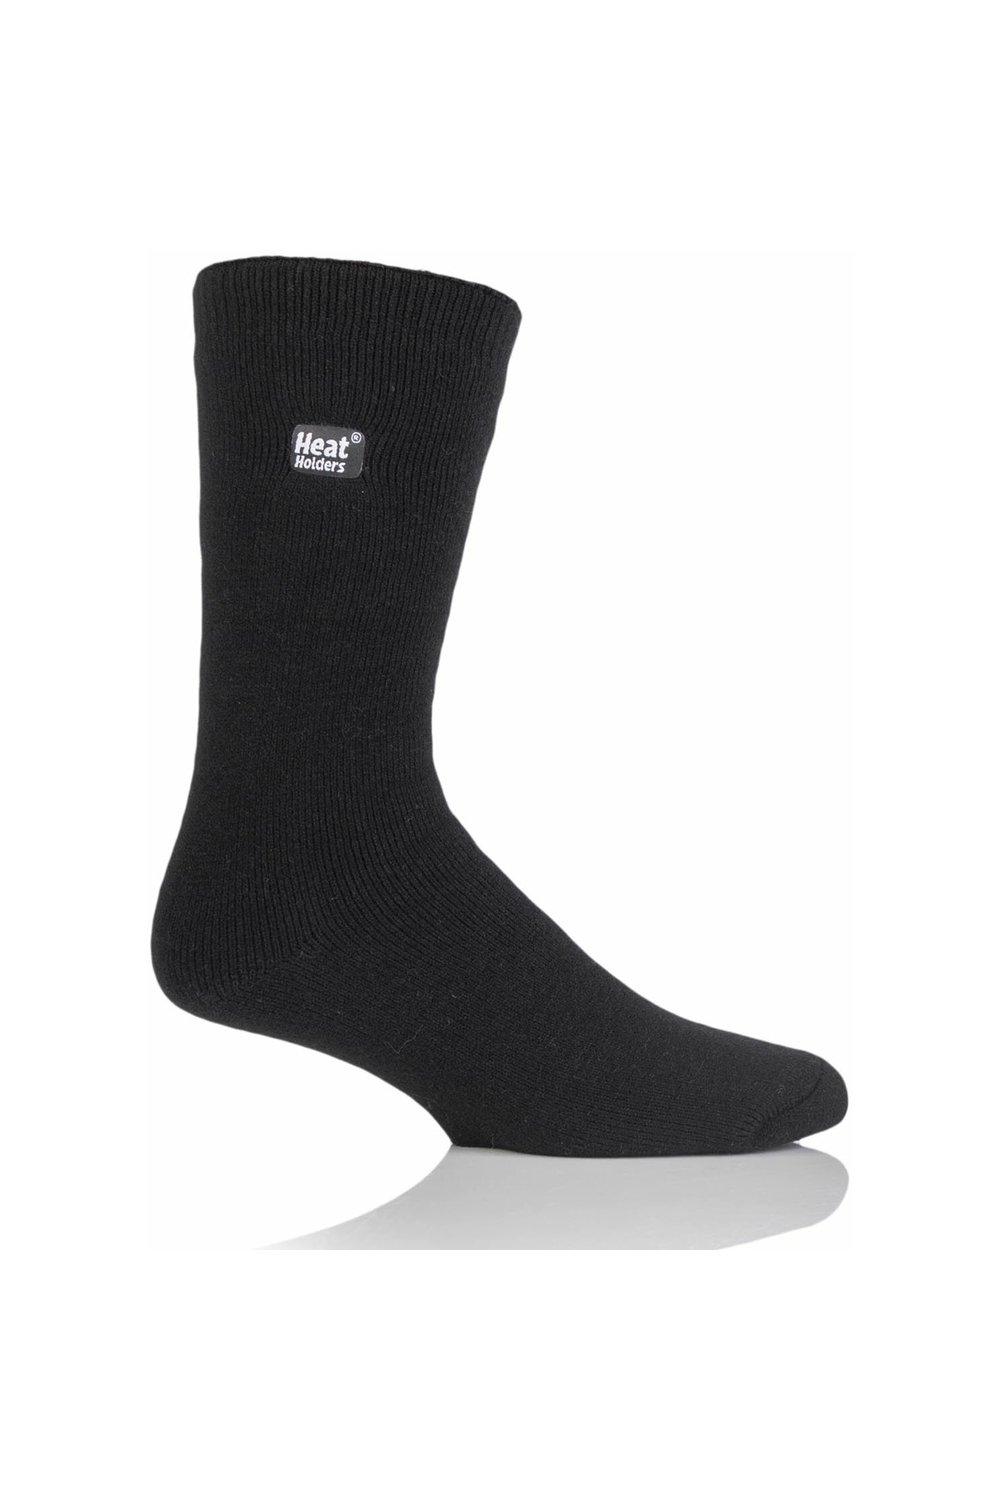 1 Pair 1.6 TOG Lite Socks